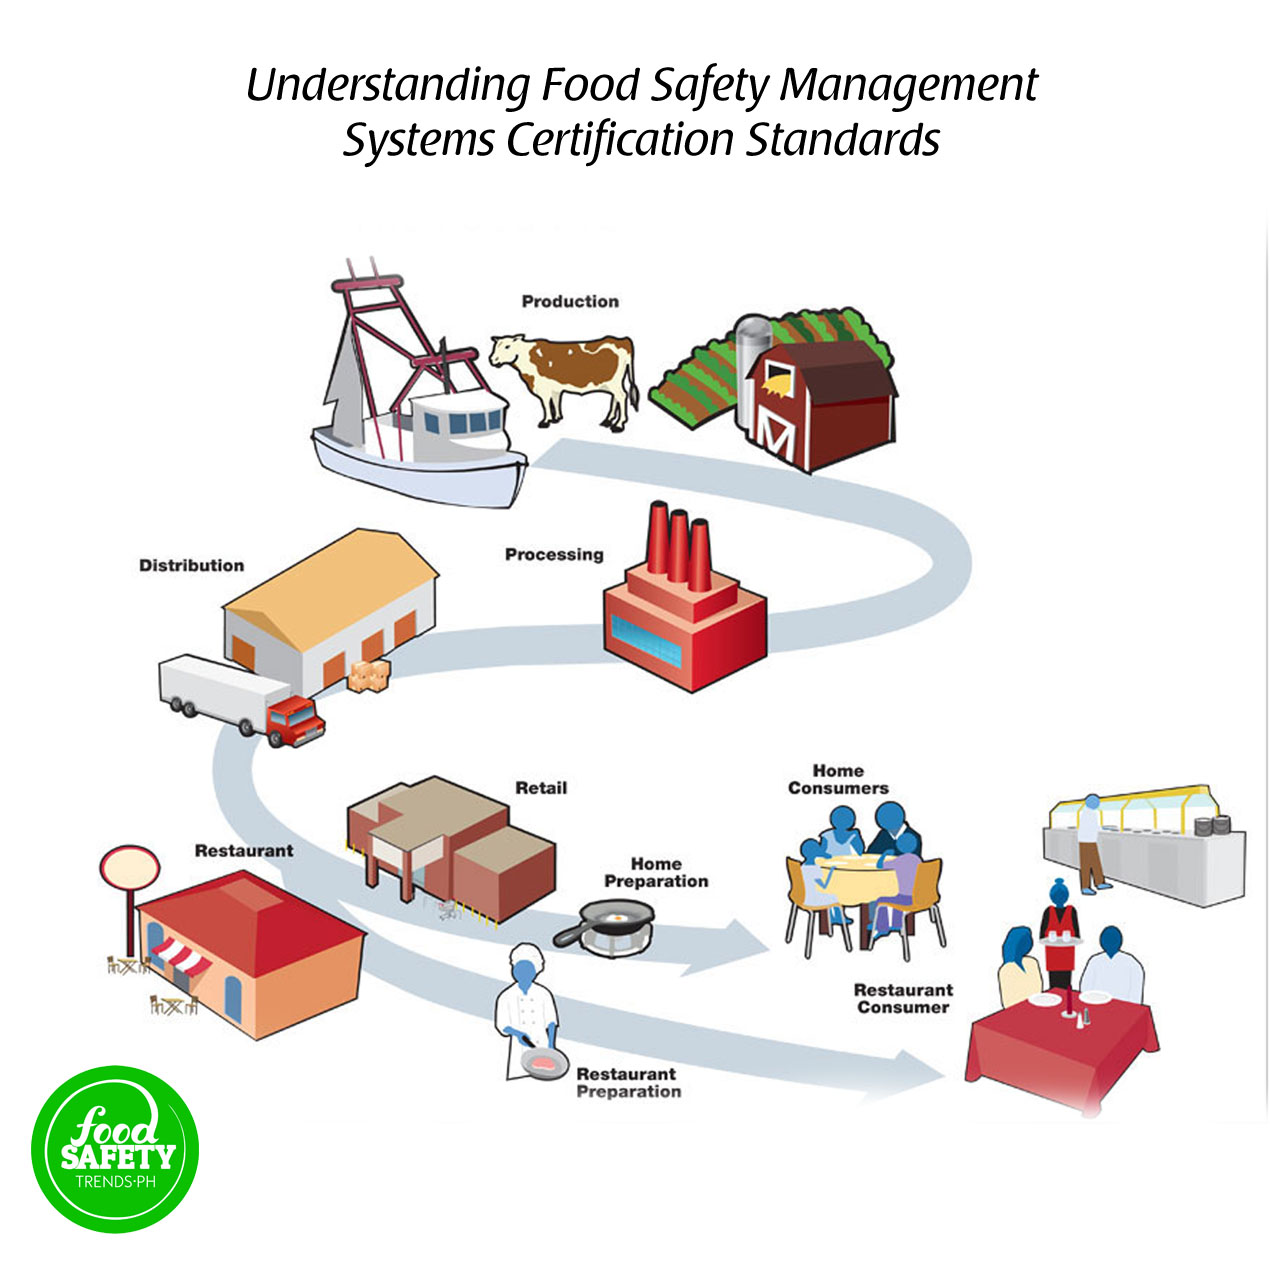 Understanding Food Safety Management Systems Certification Standards